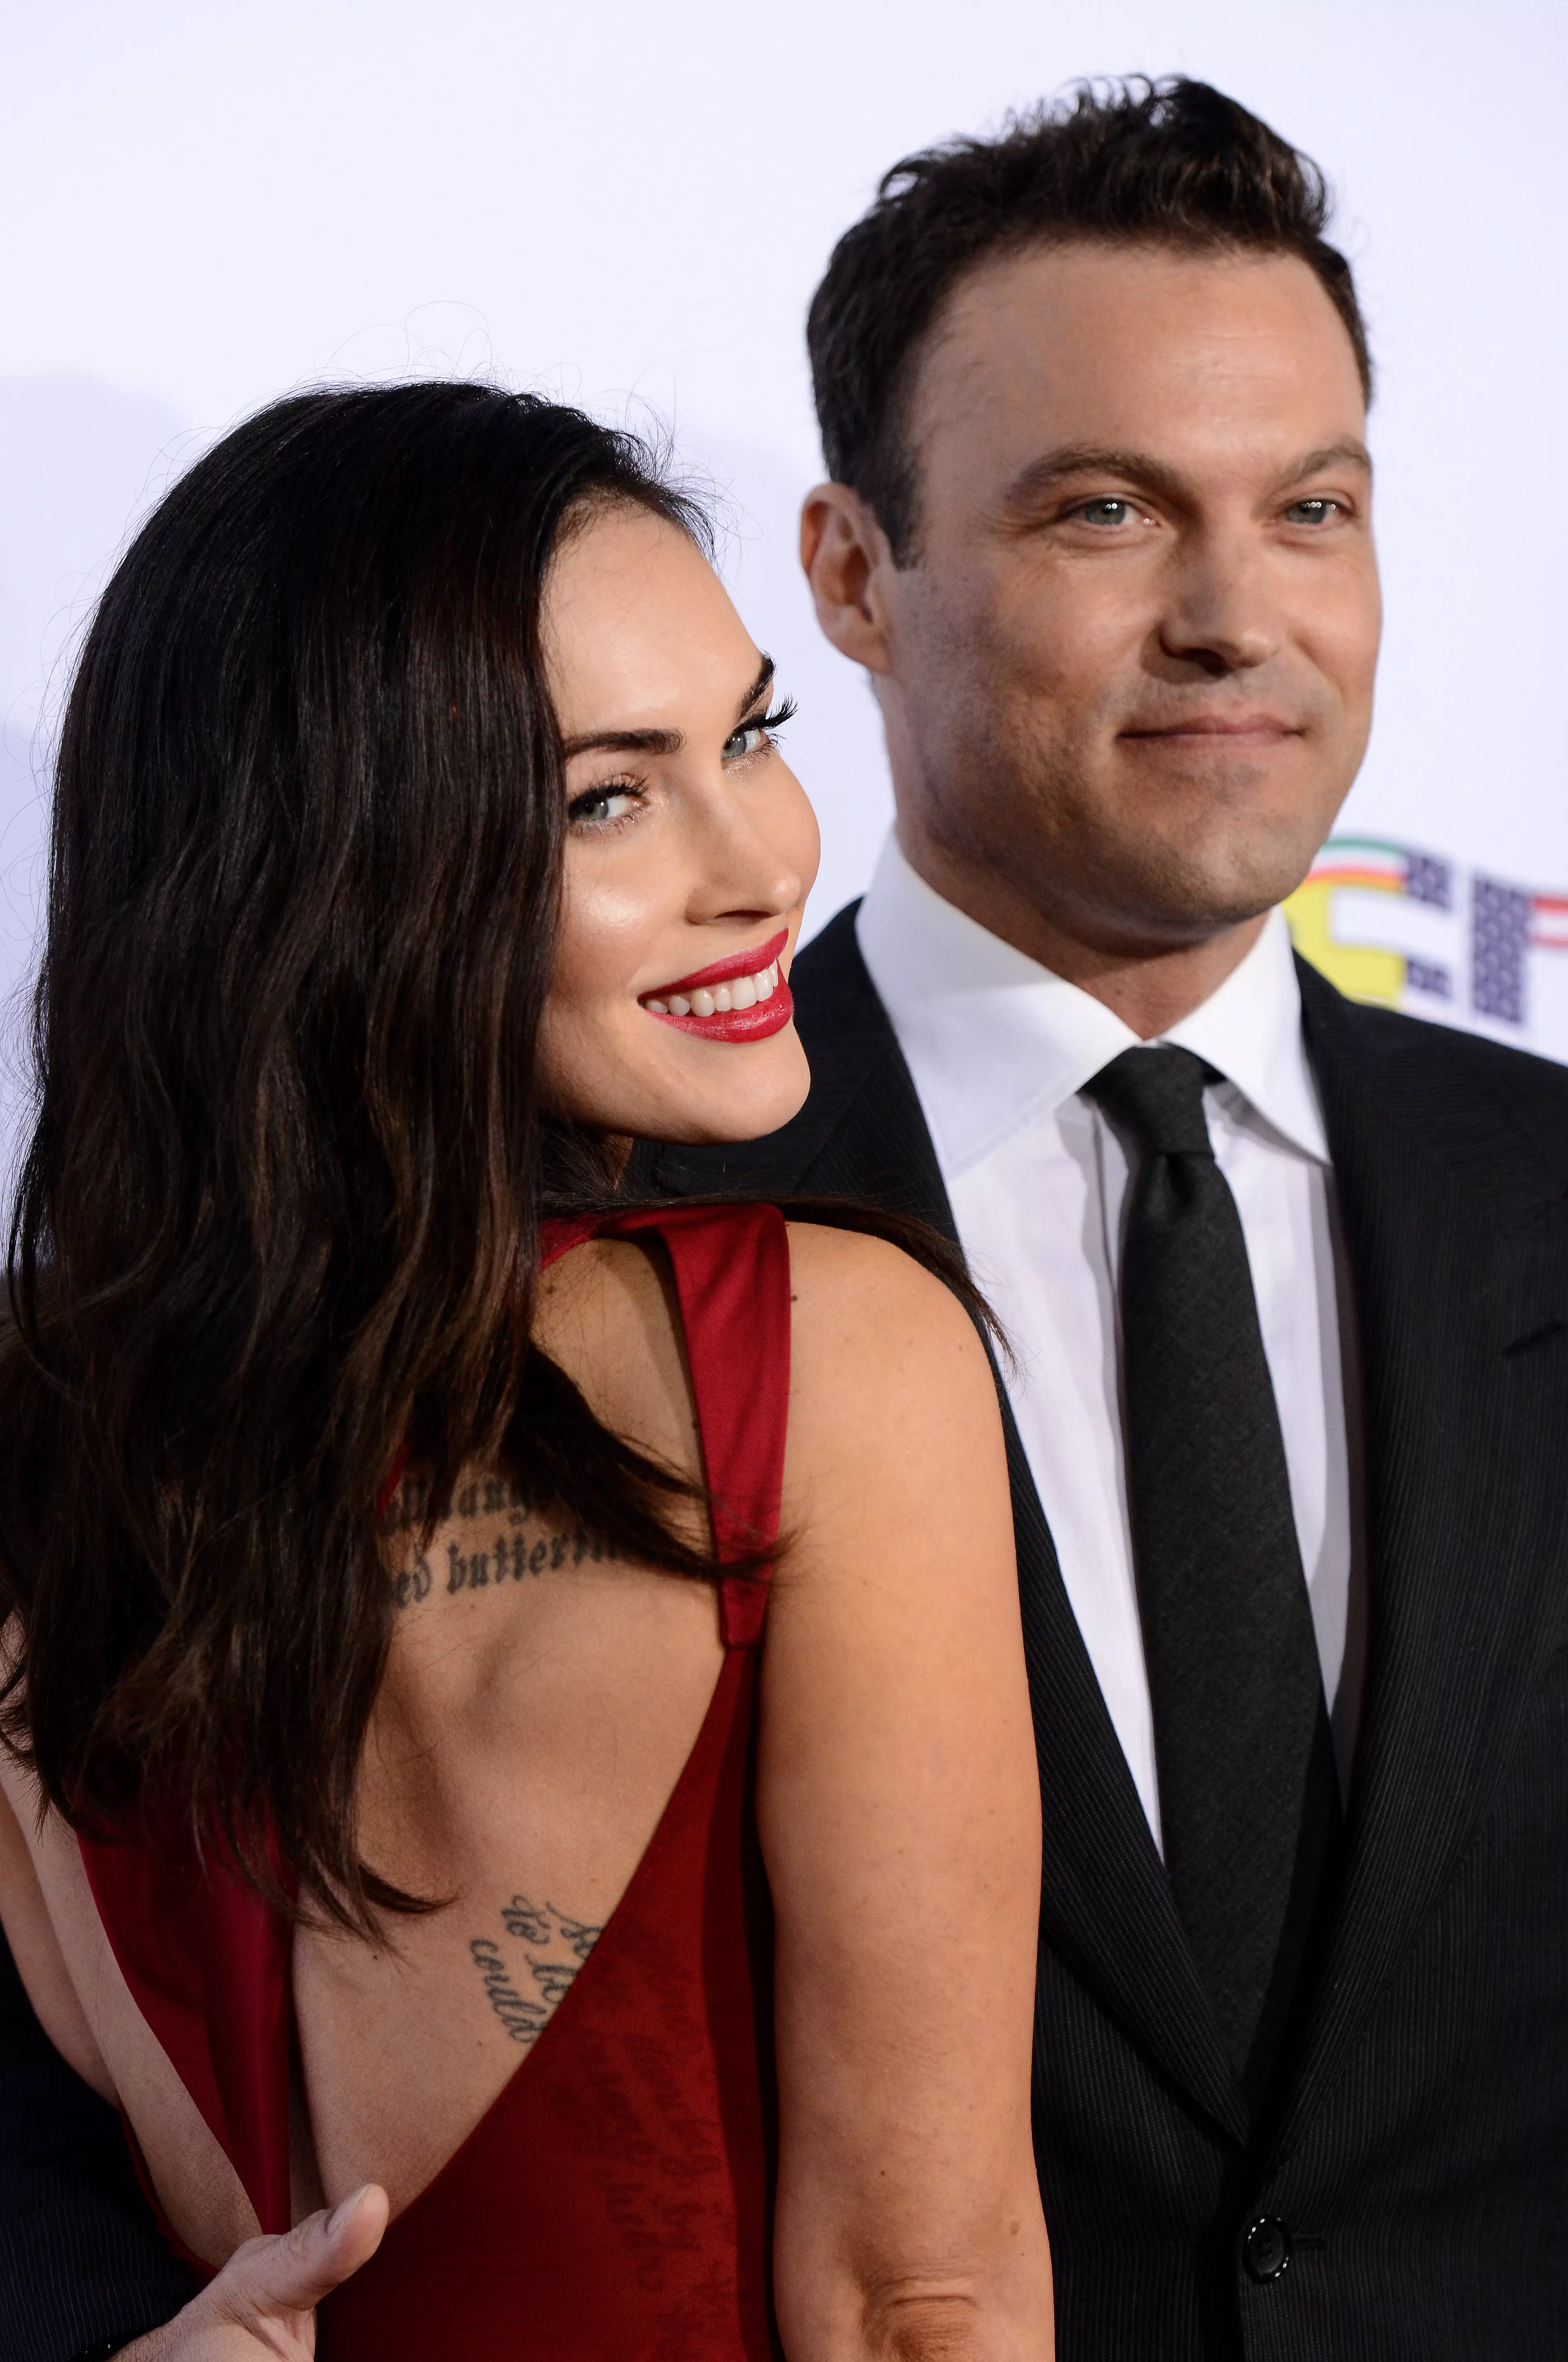 Megan Fox and ex-husband Brian Green in October 2014. (